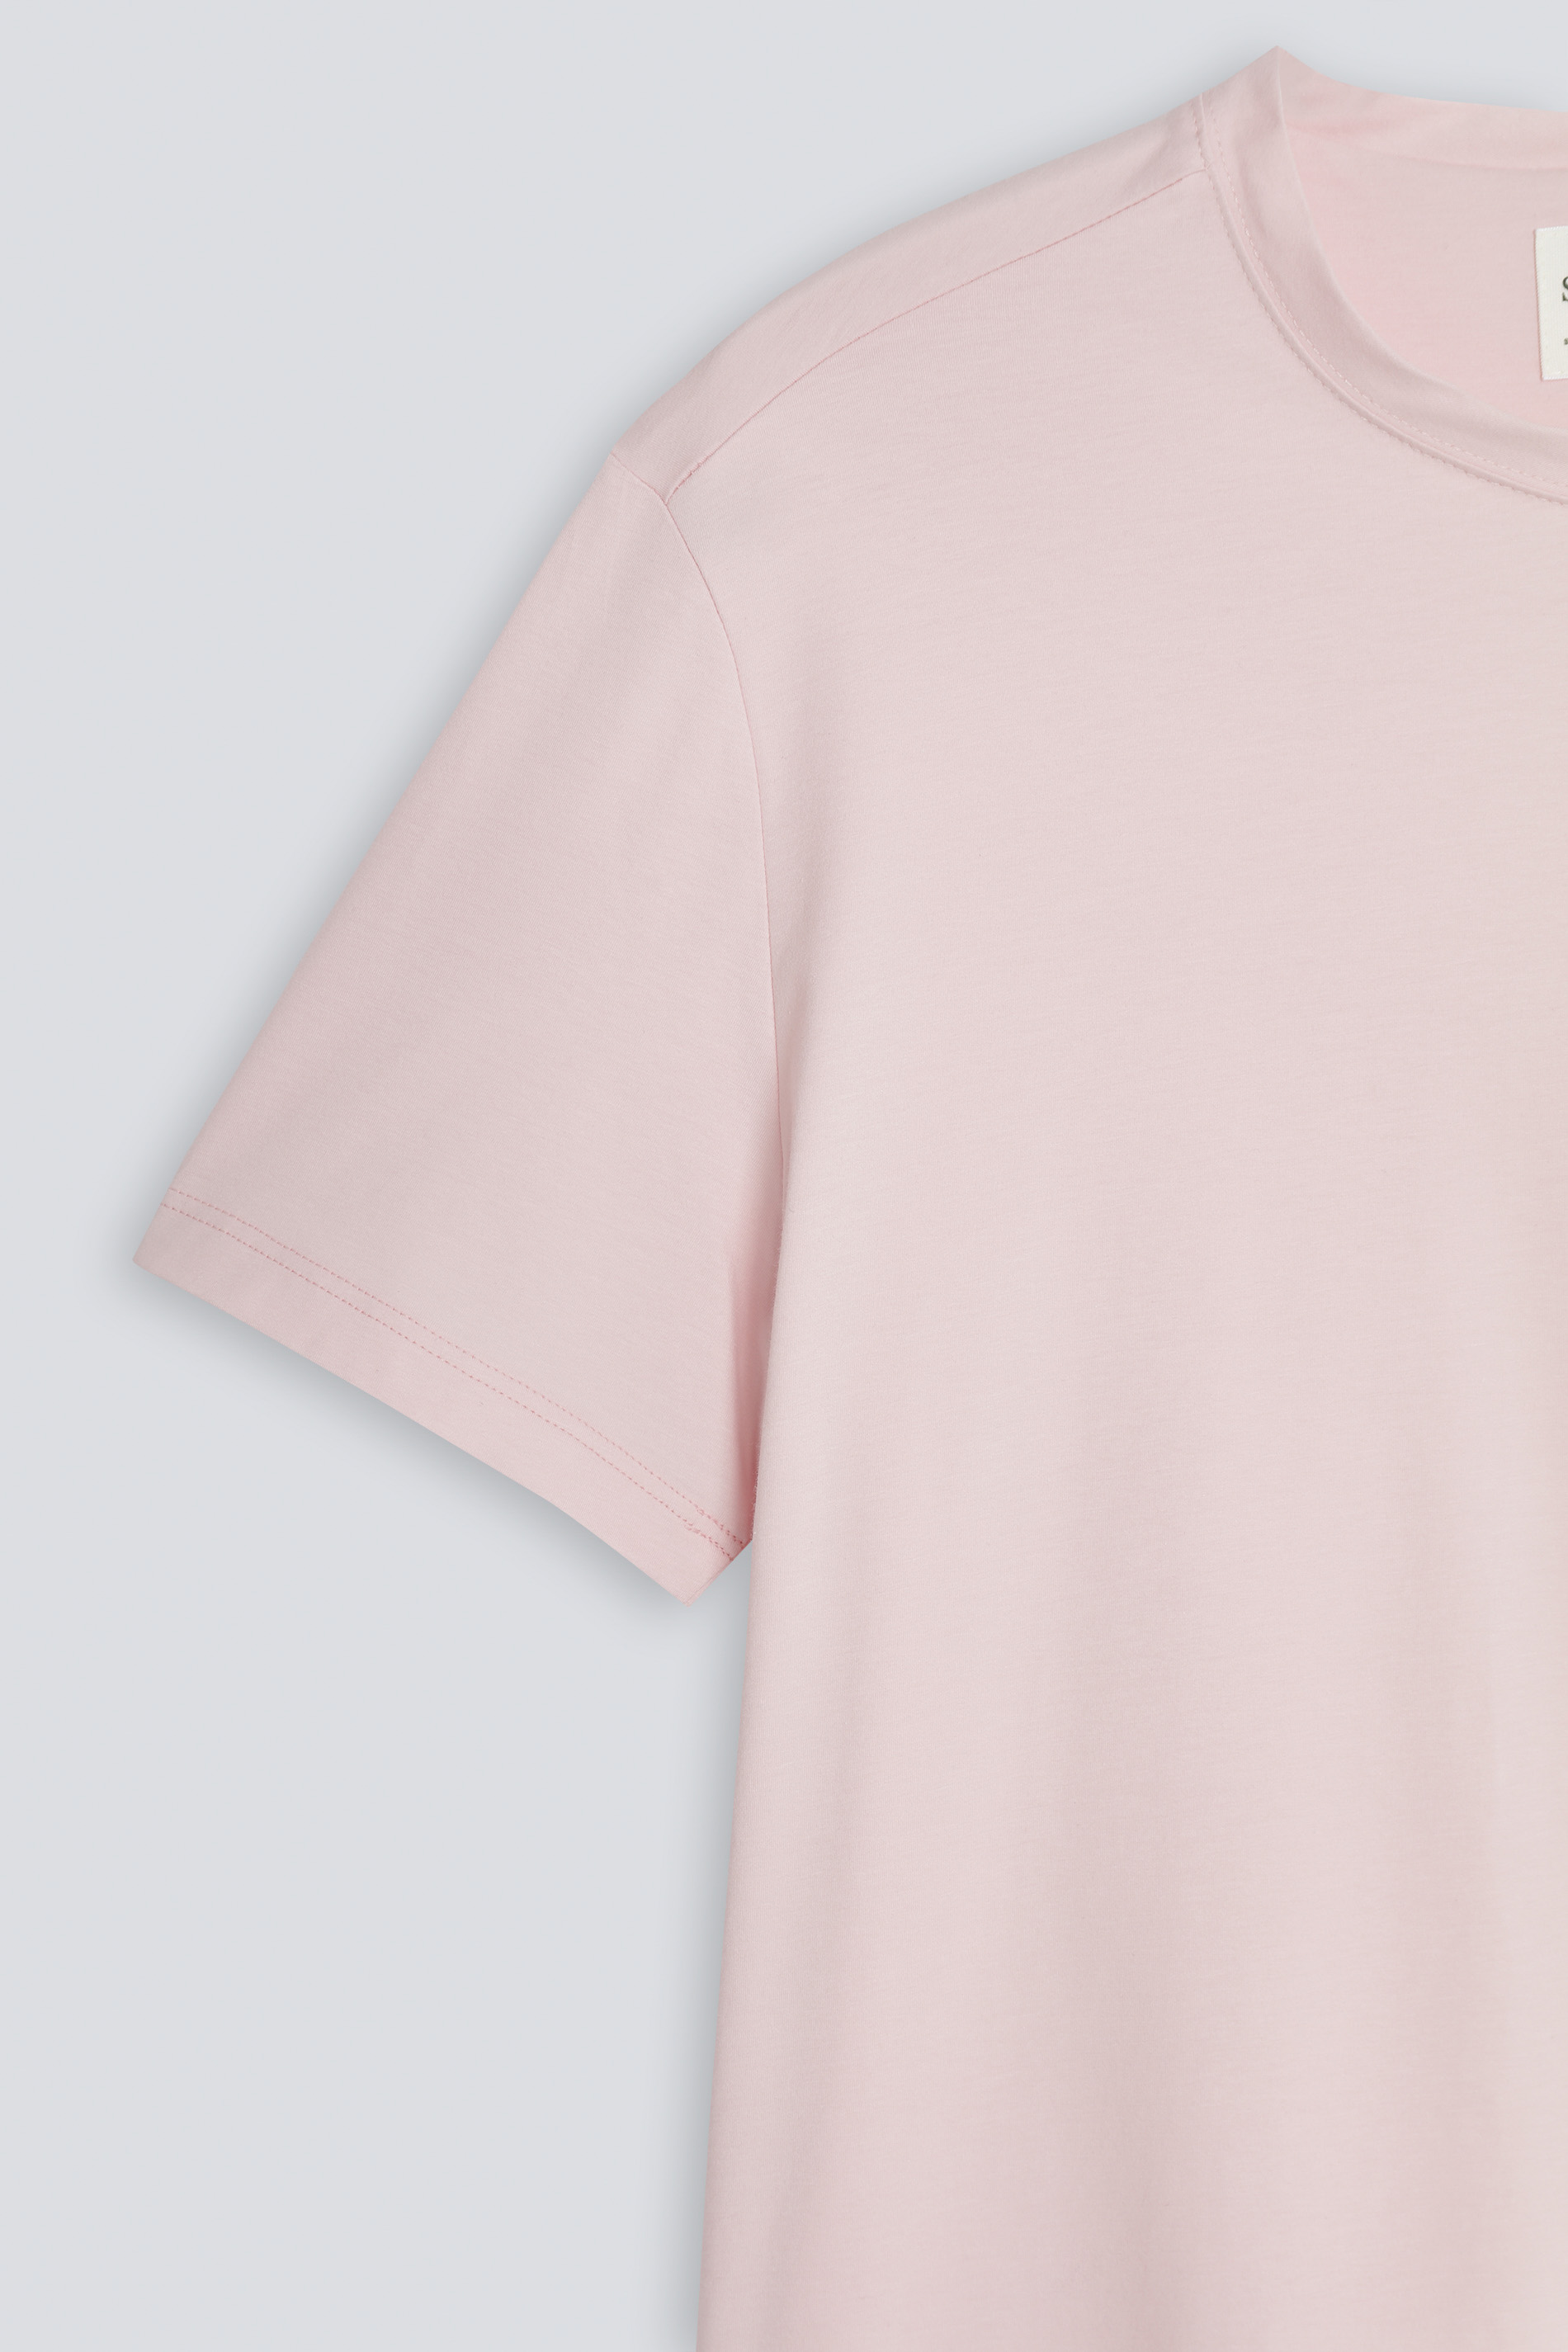 T-shirt Serie Cotone Stretch Detail View 01 | mey®